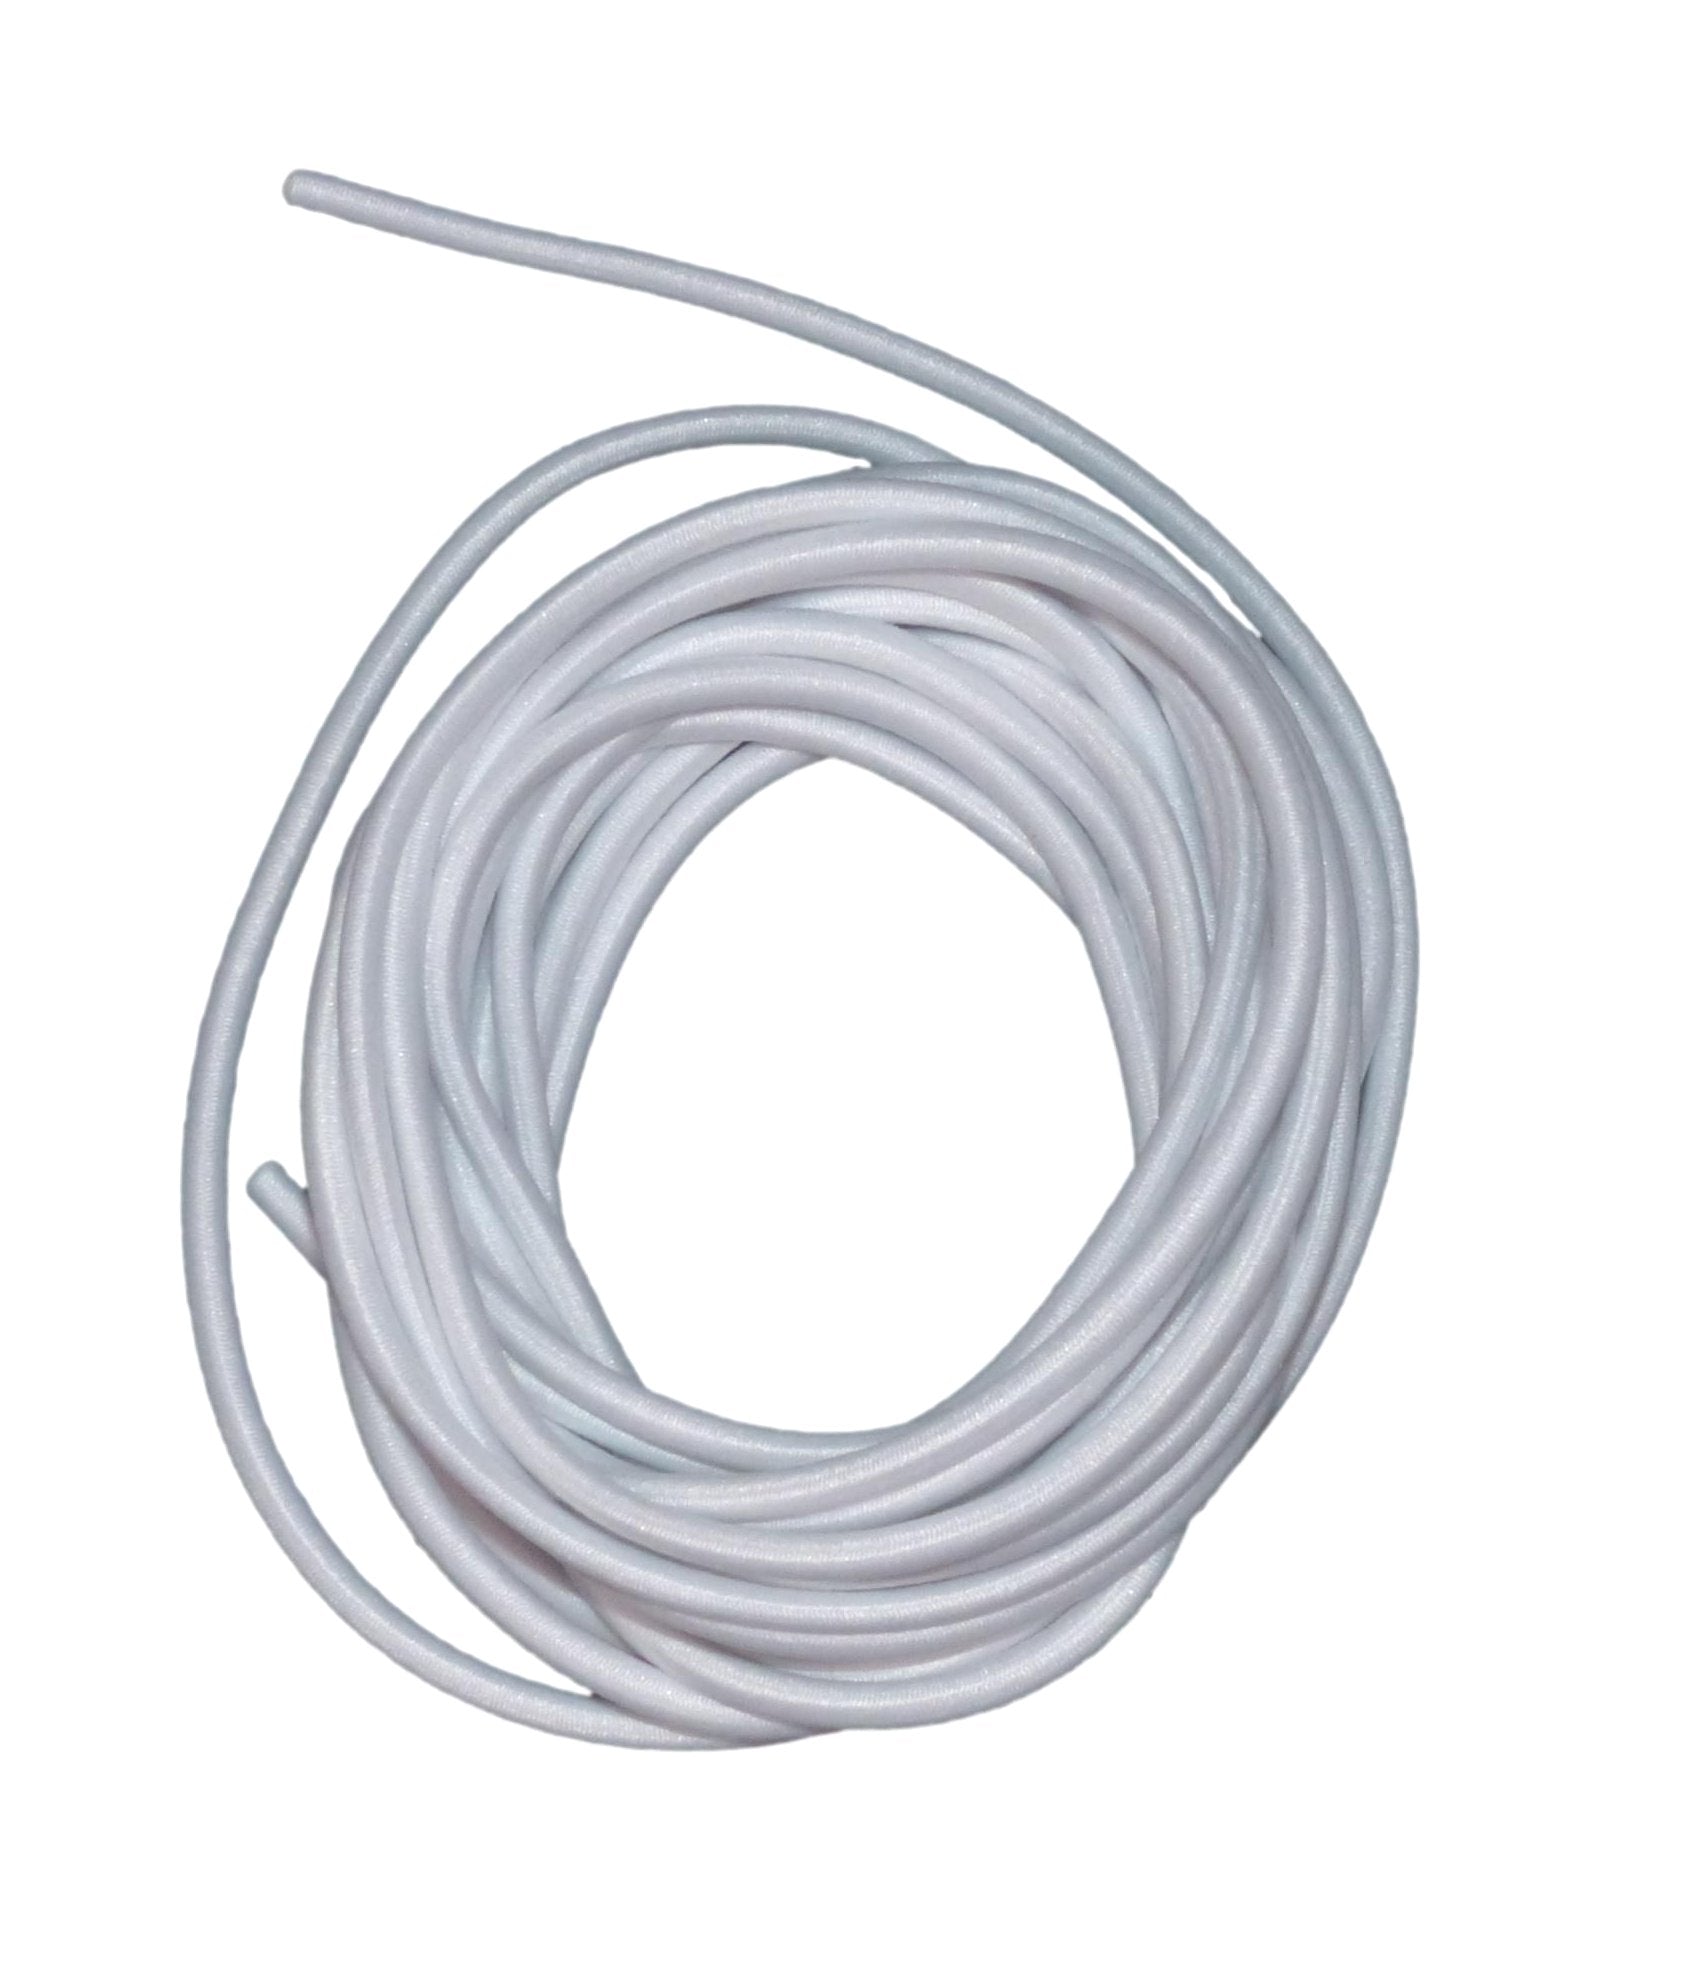 Benristraps 3mm shock cord in white, five metre roll